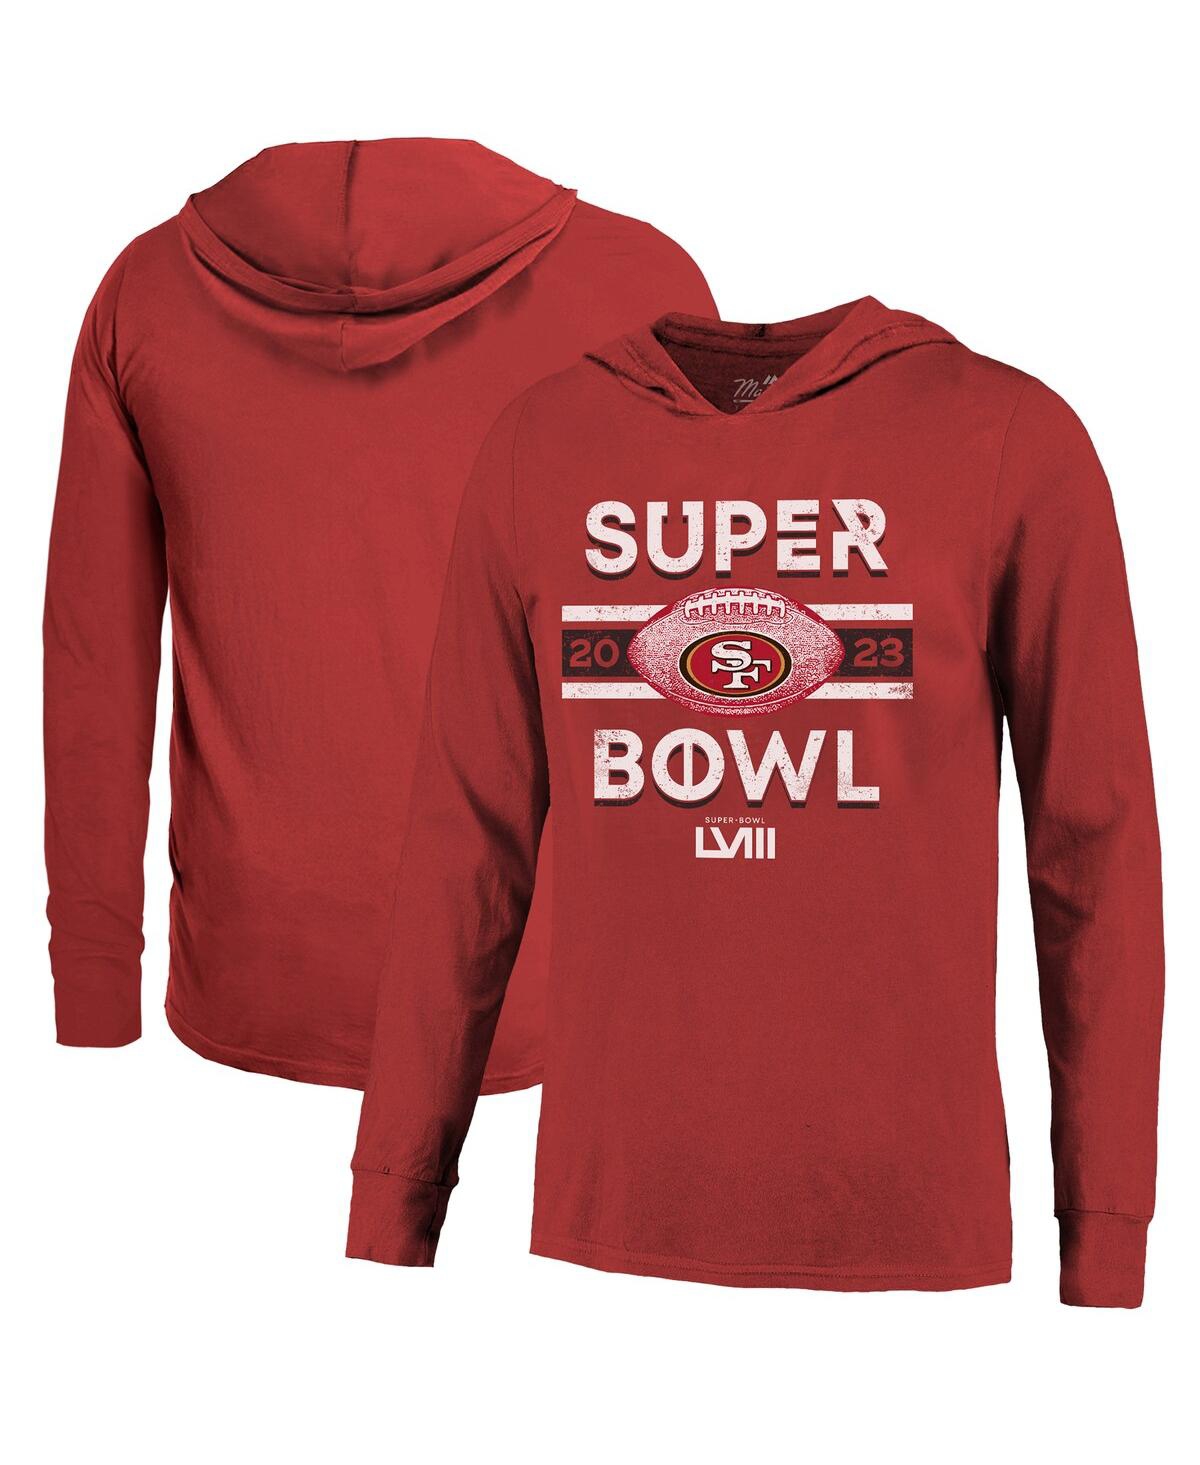 Men's Majestic Threads Scarlet Distressed San Francisco 49ers Super Bowl Lviii Tri-Blend Soft Hand Long Sleeve Hoodie T-shirt - Scarlet